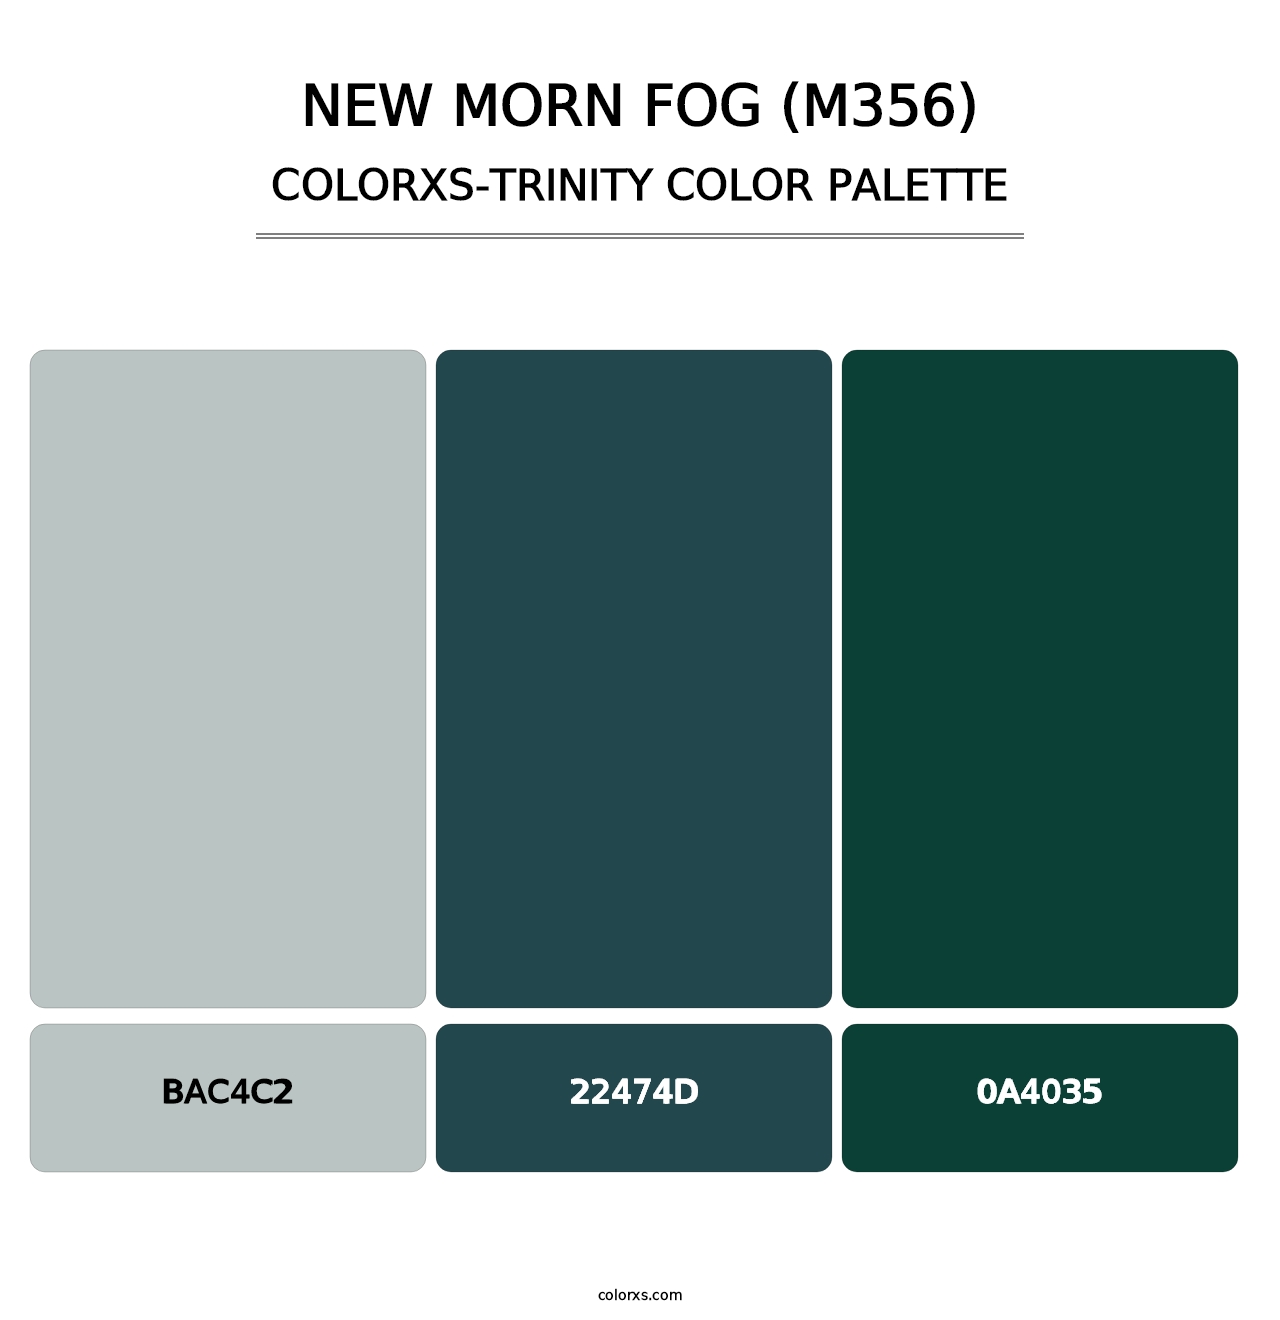 New Morn Fog (M356) - Colorxs Trinity Palette